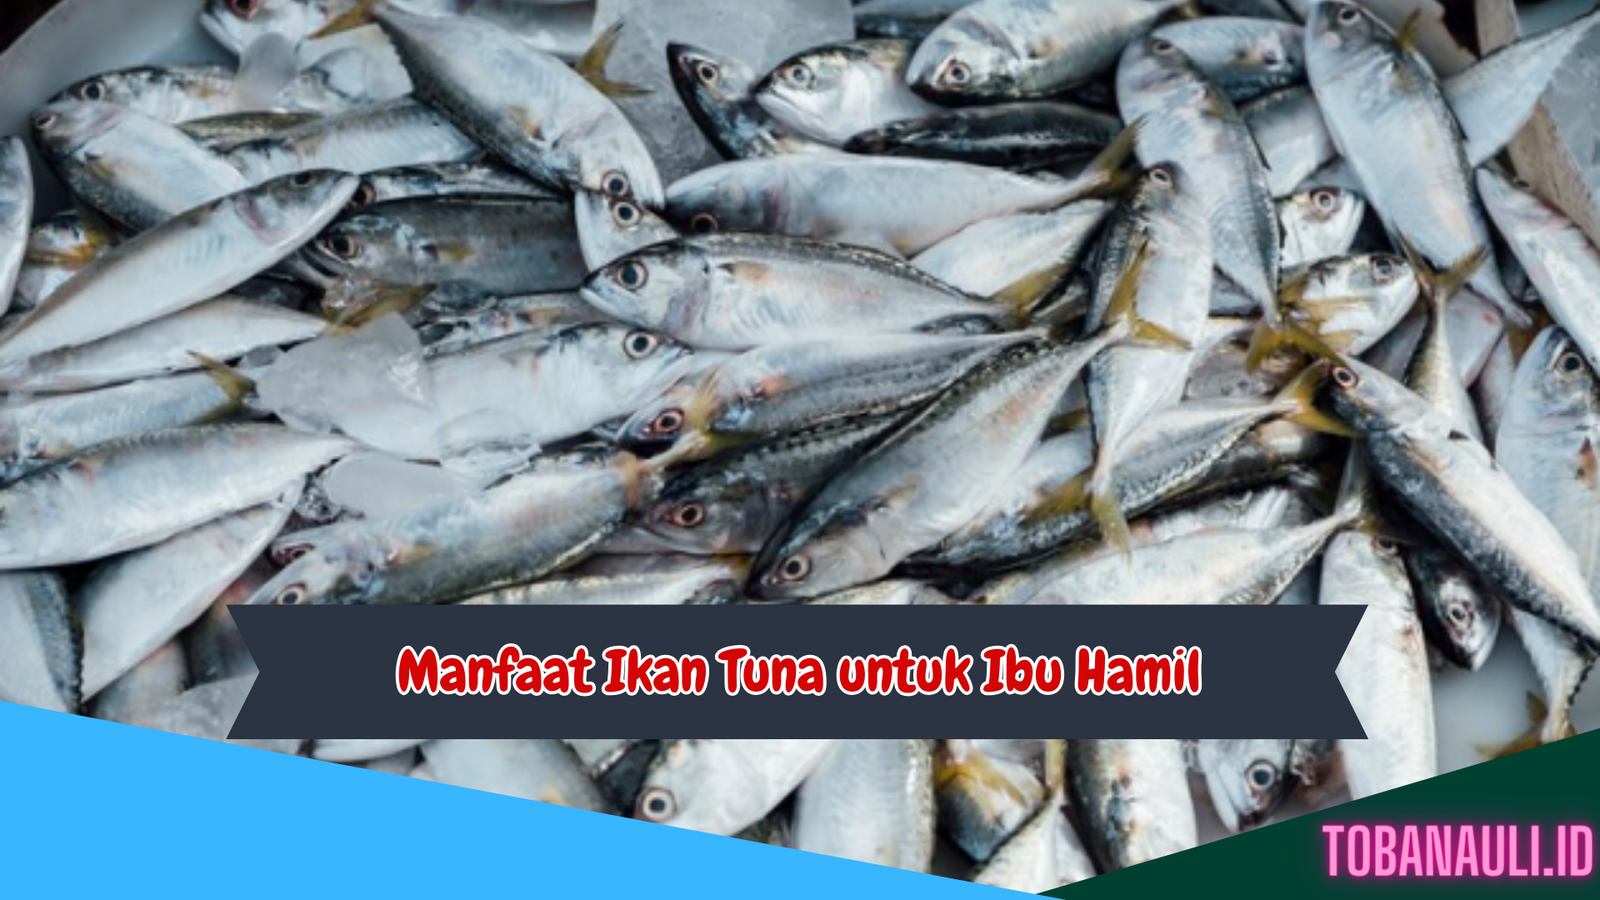 Manfaat Ikan Tuna untuk Ibu Hamil